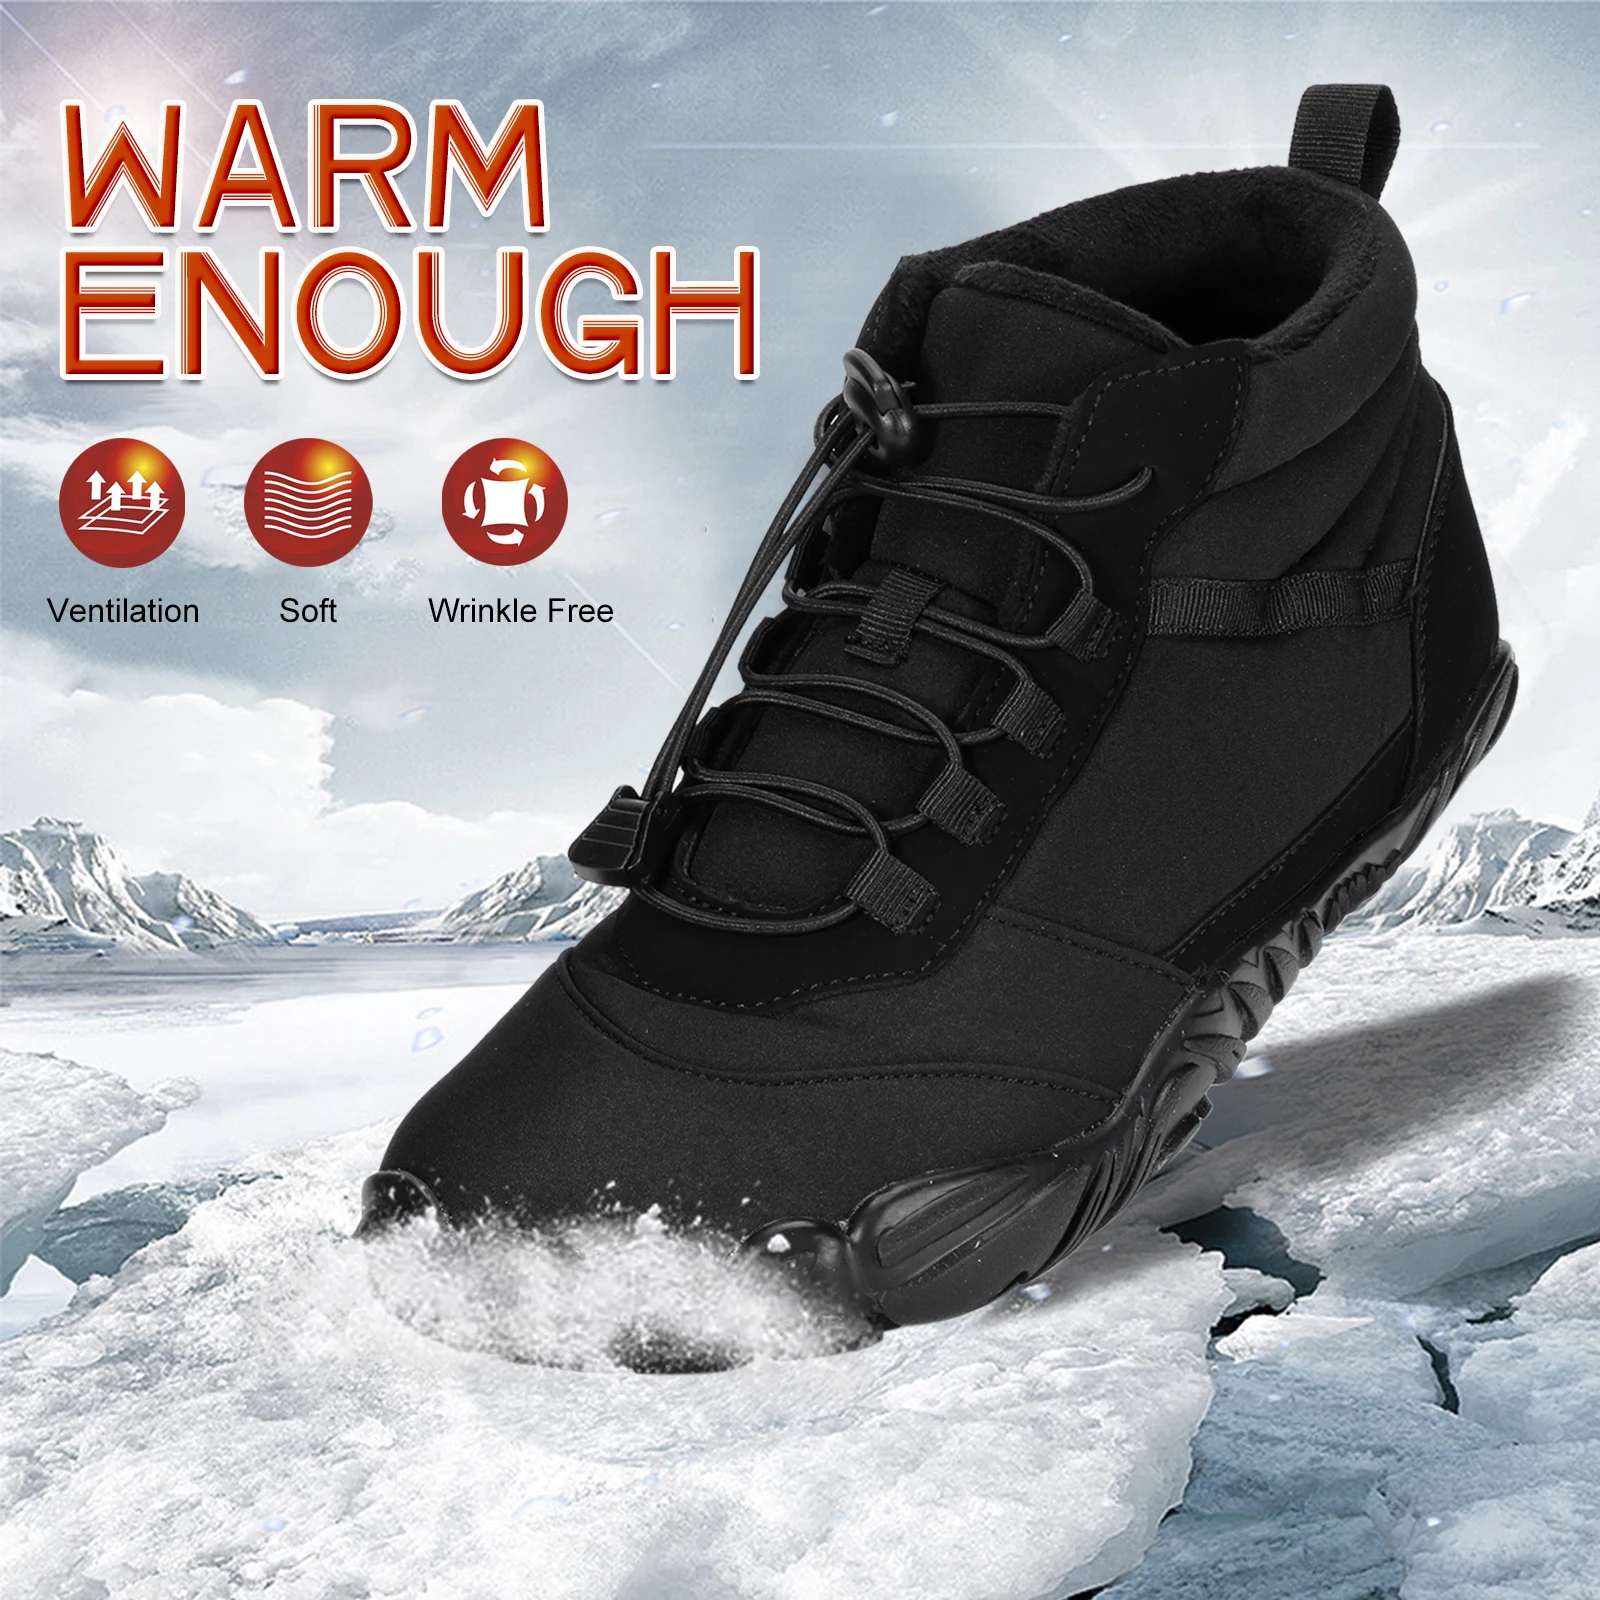 

Winter Warm Jogging Sneakers Women Men Rubber Running Barefoot Shoes Waterproof Non-Slip Breathable for Outdoor Walking